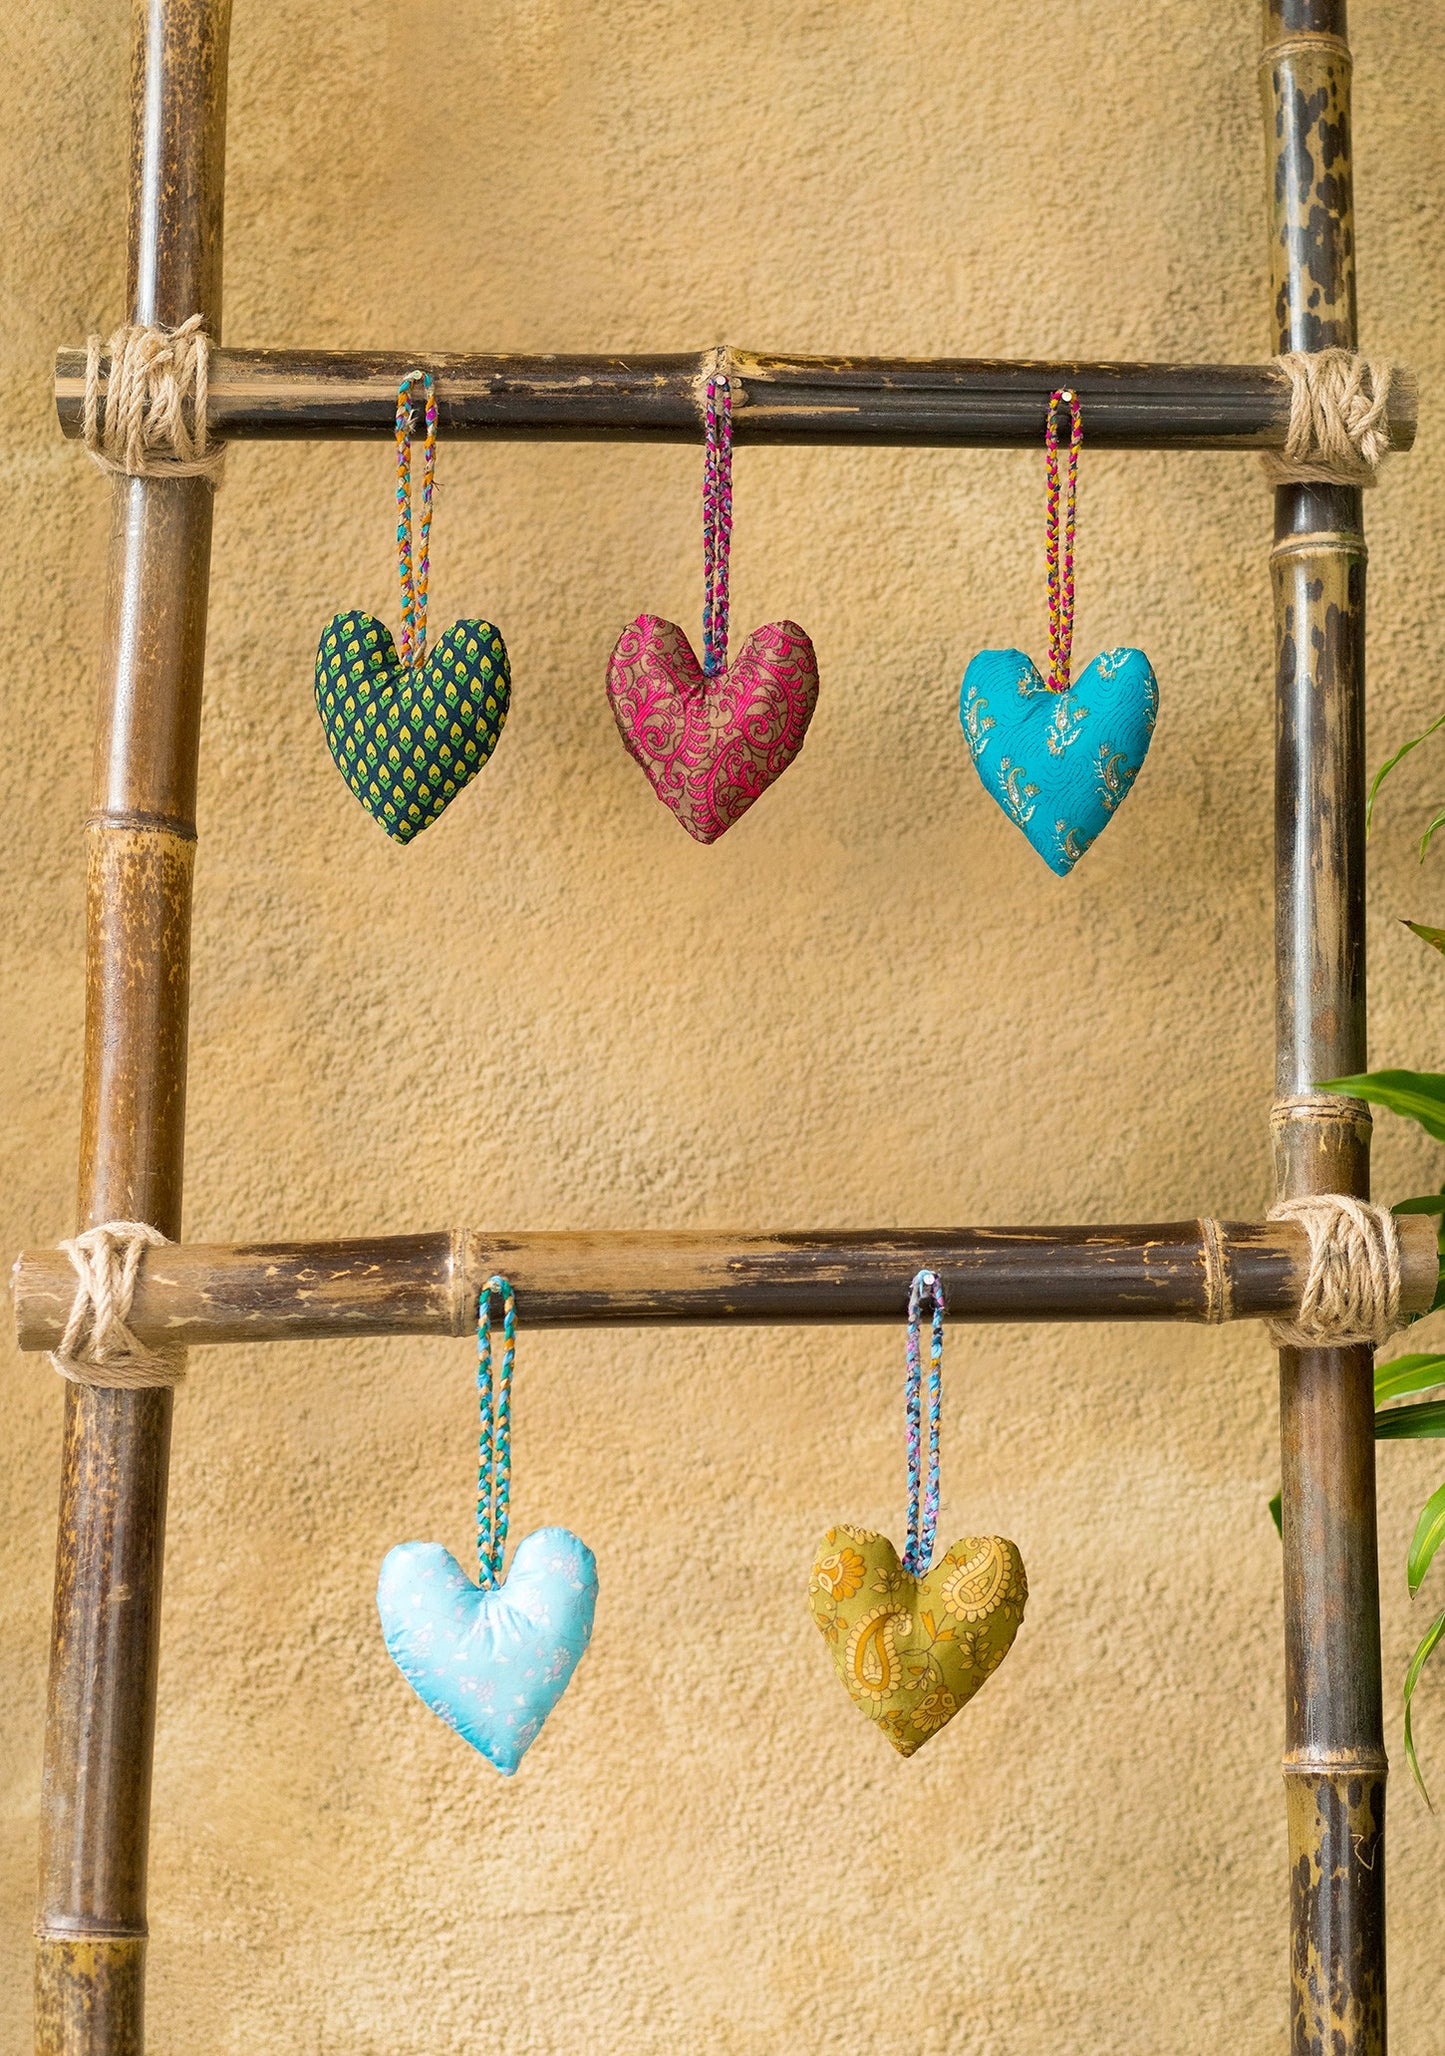 Hanging Recycled Sari Heart